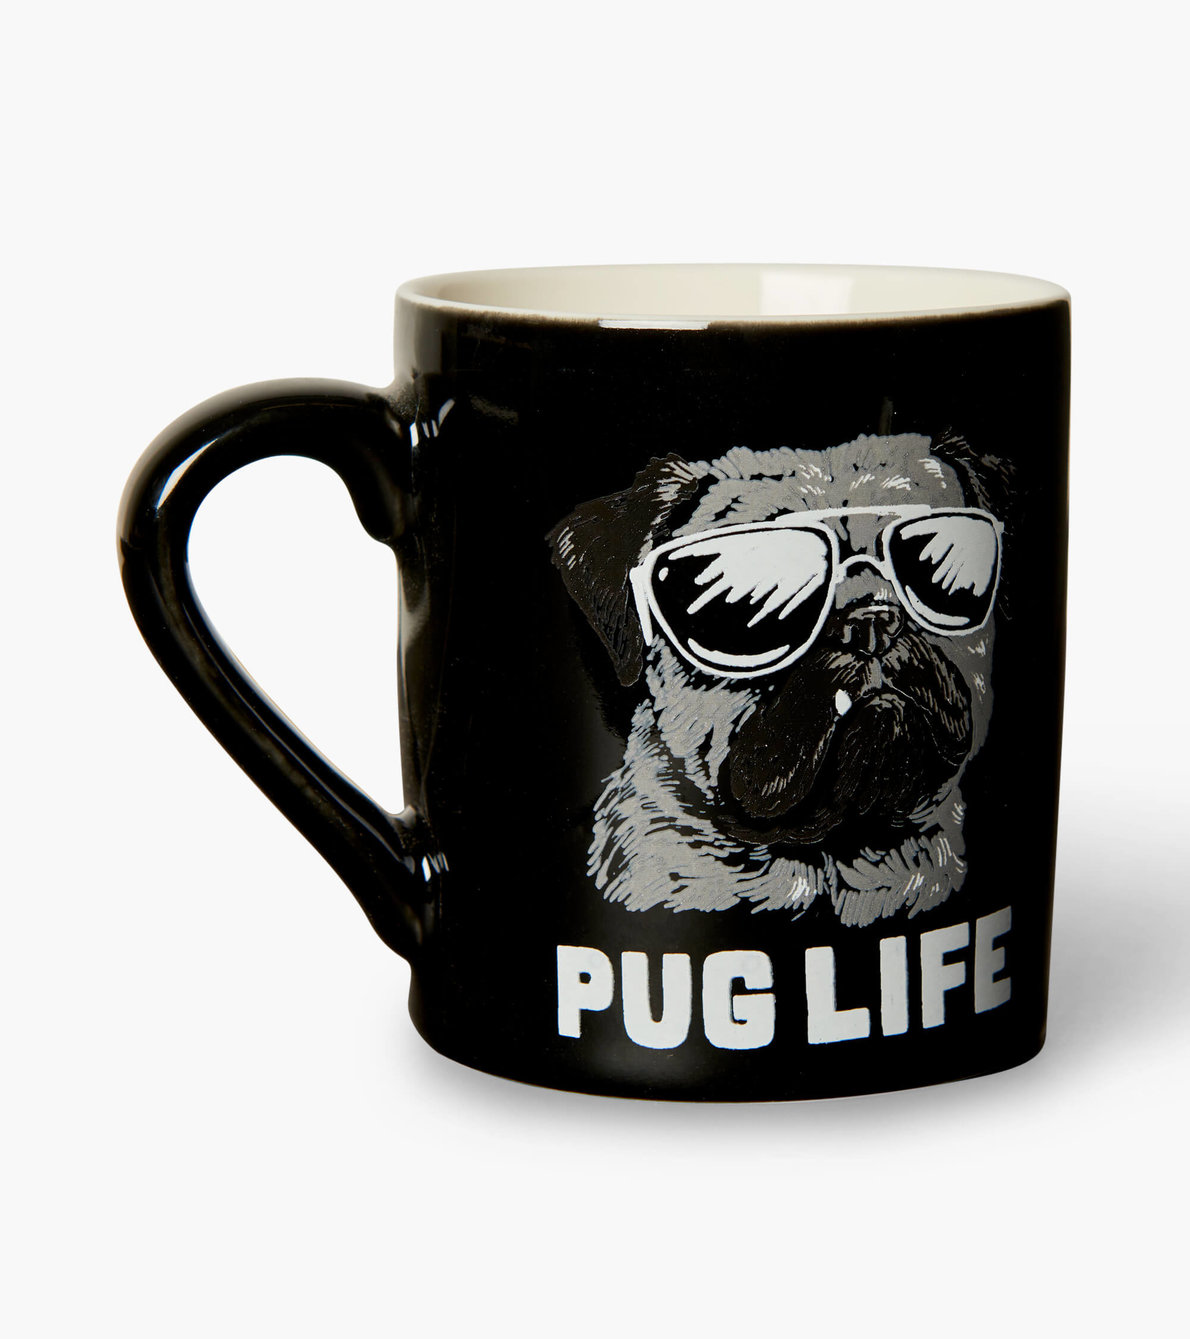 View larger image of Pug Life Ceramic Mug